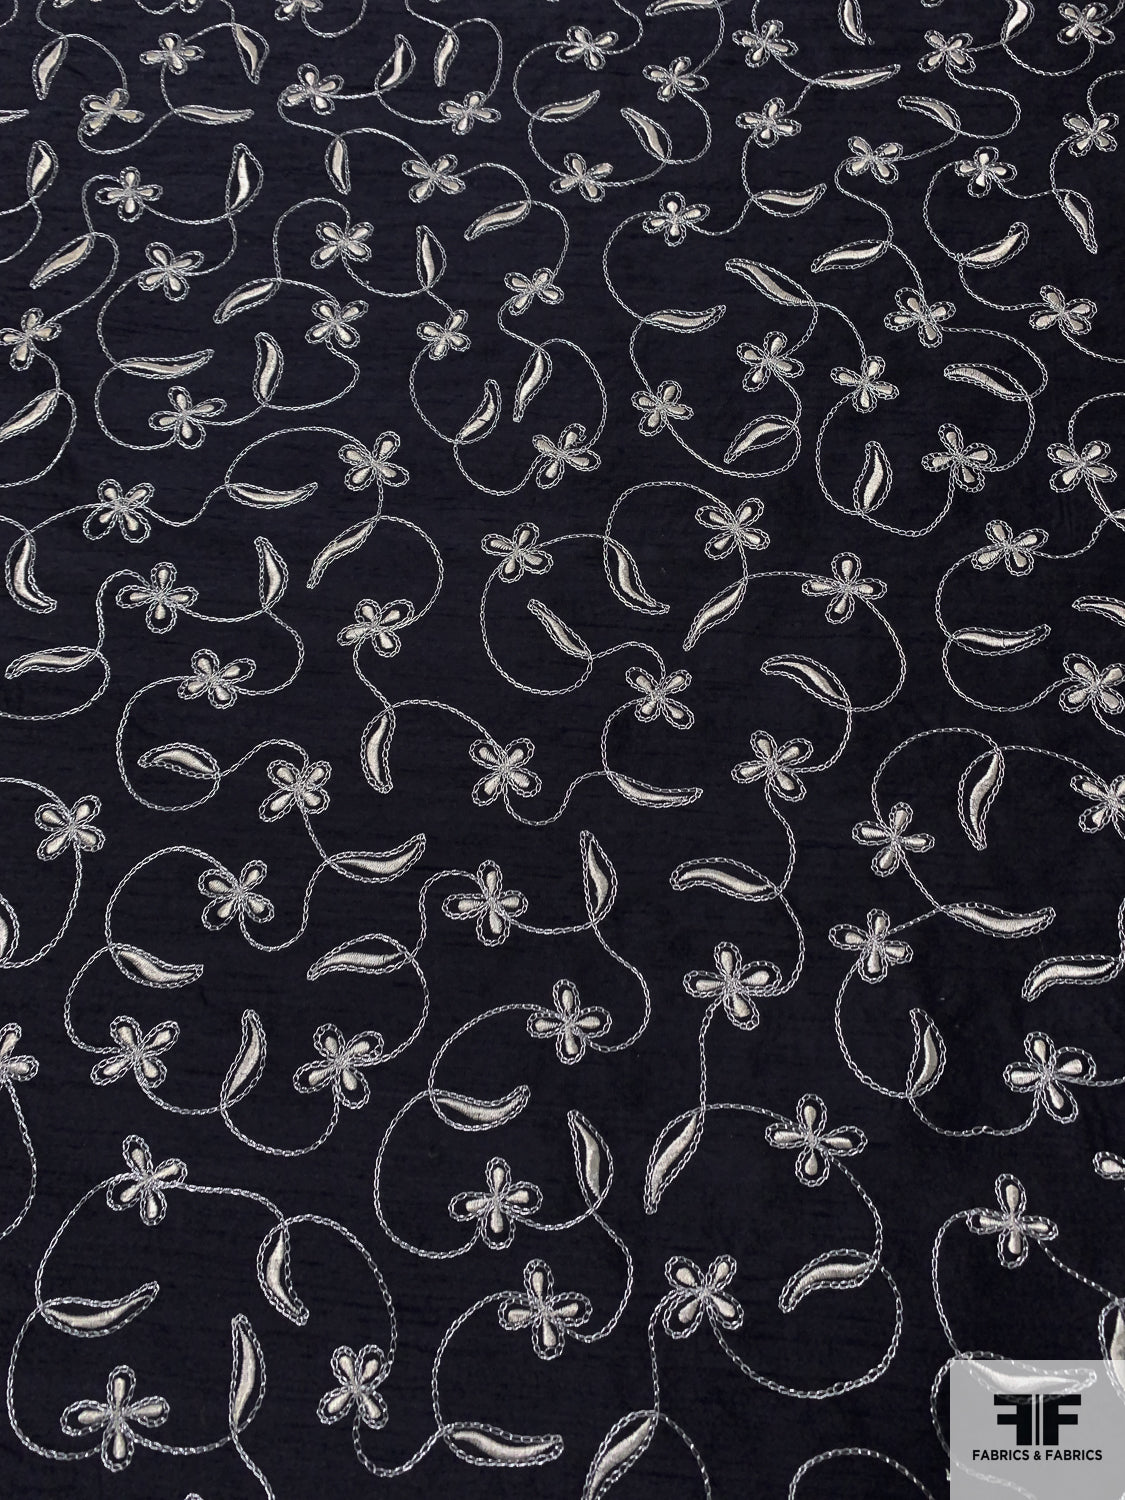 Floral Vines Embroidered Silk Shantung - Black / Cream / Silver